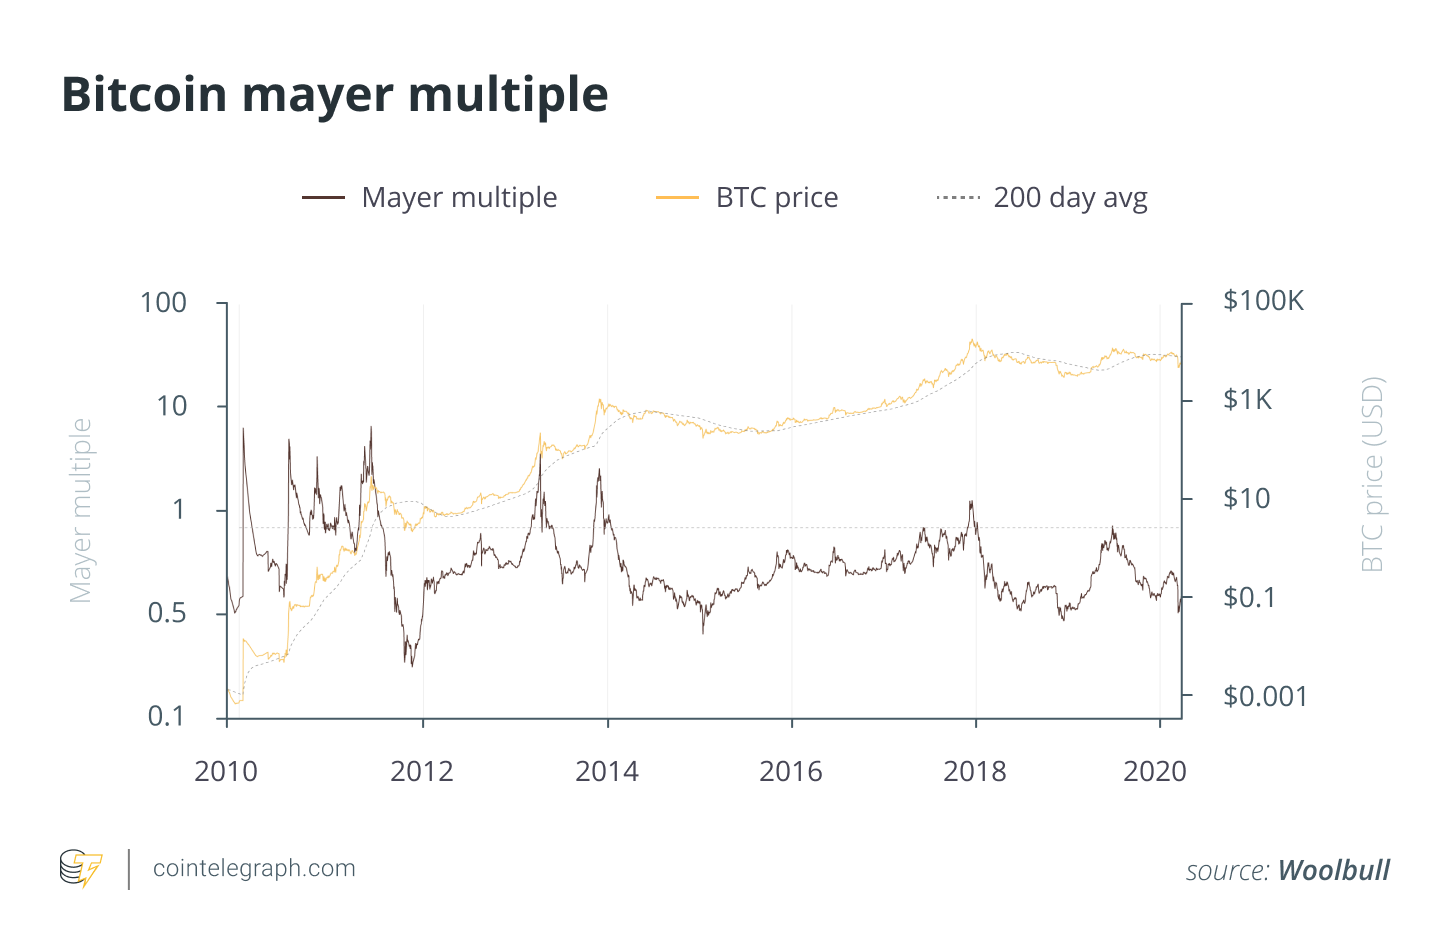 Bitcoin mayer multiple